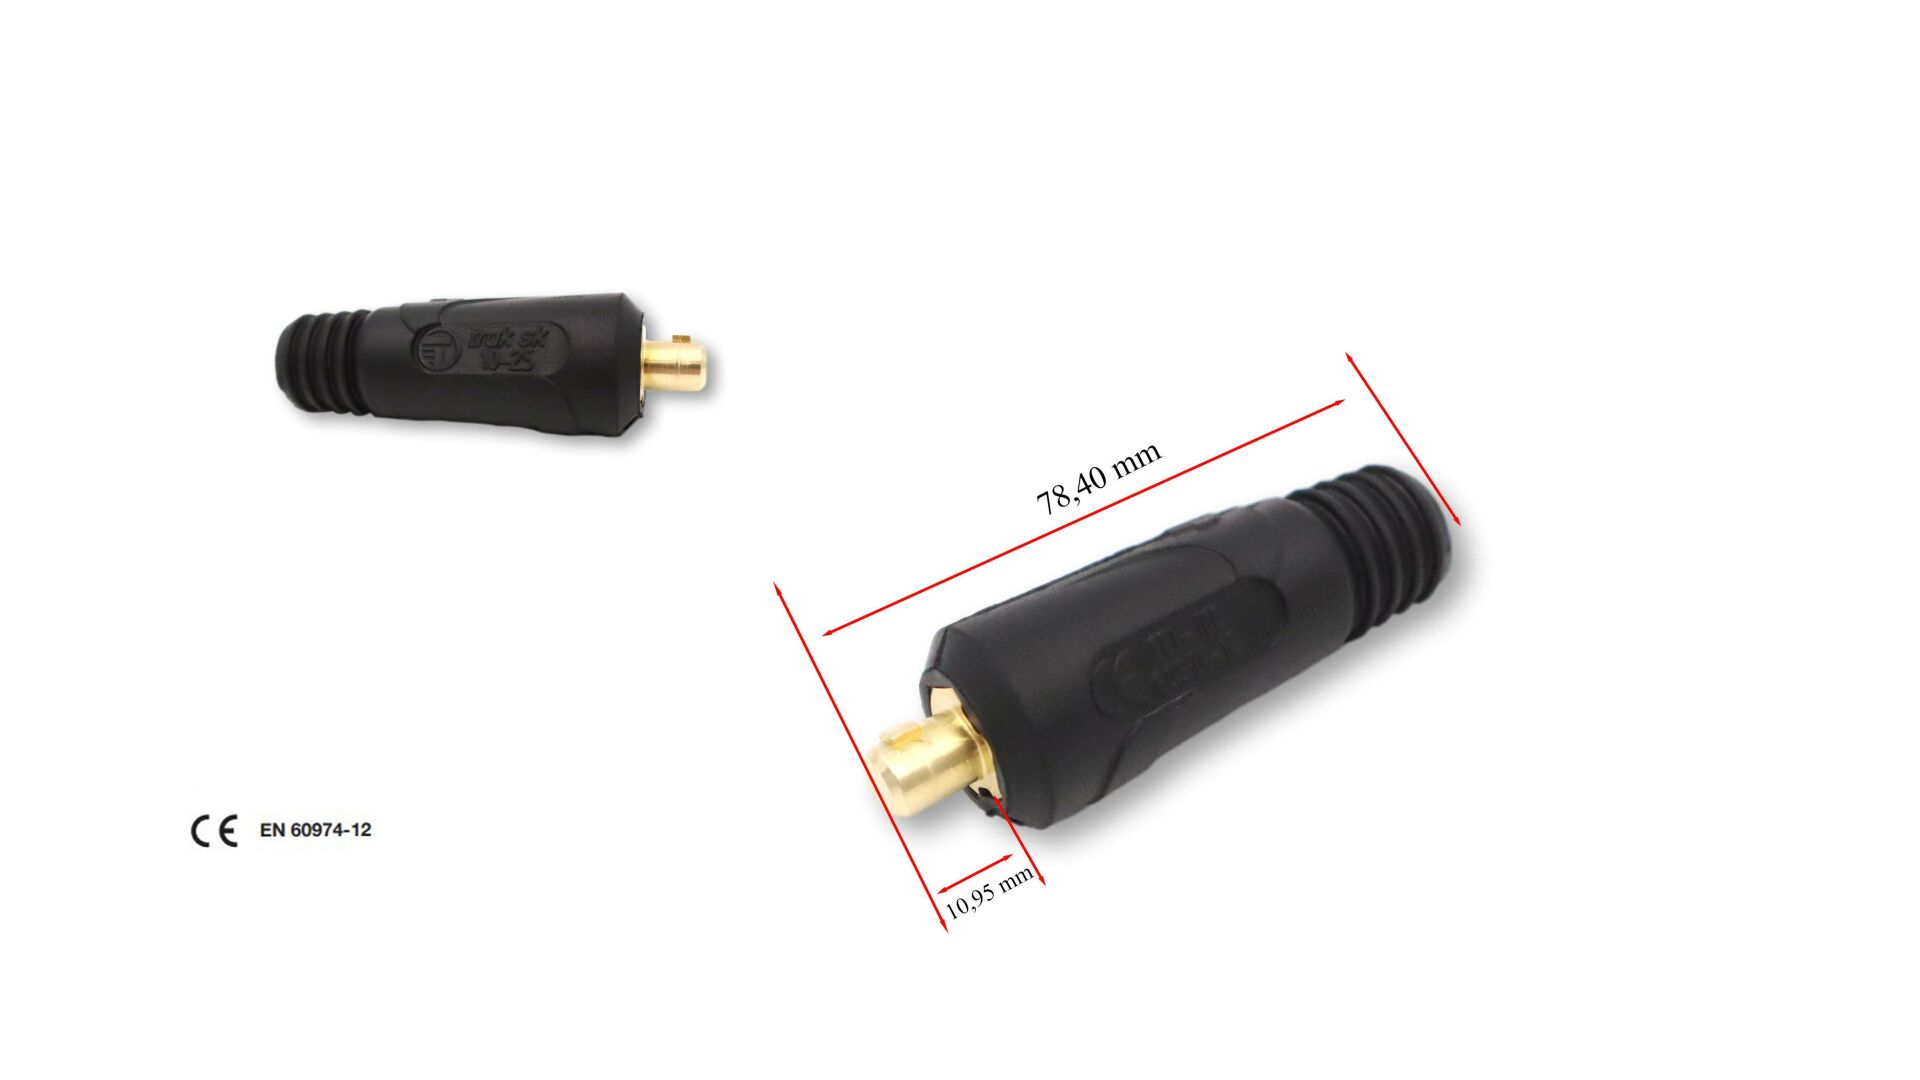 CX0020 10-25 mm² Kaynak Kablo Soketi Kauçuk Erkek Trafimet İtalyan